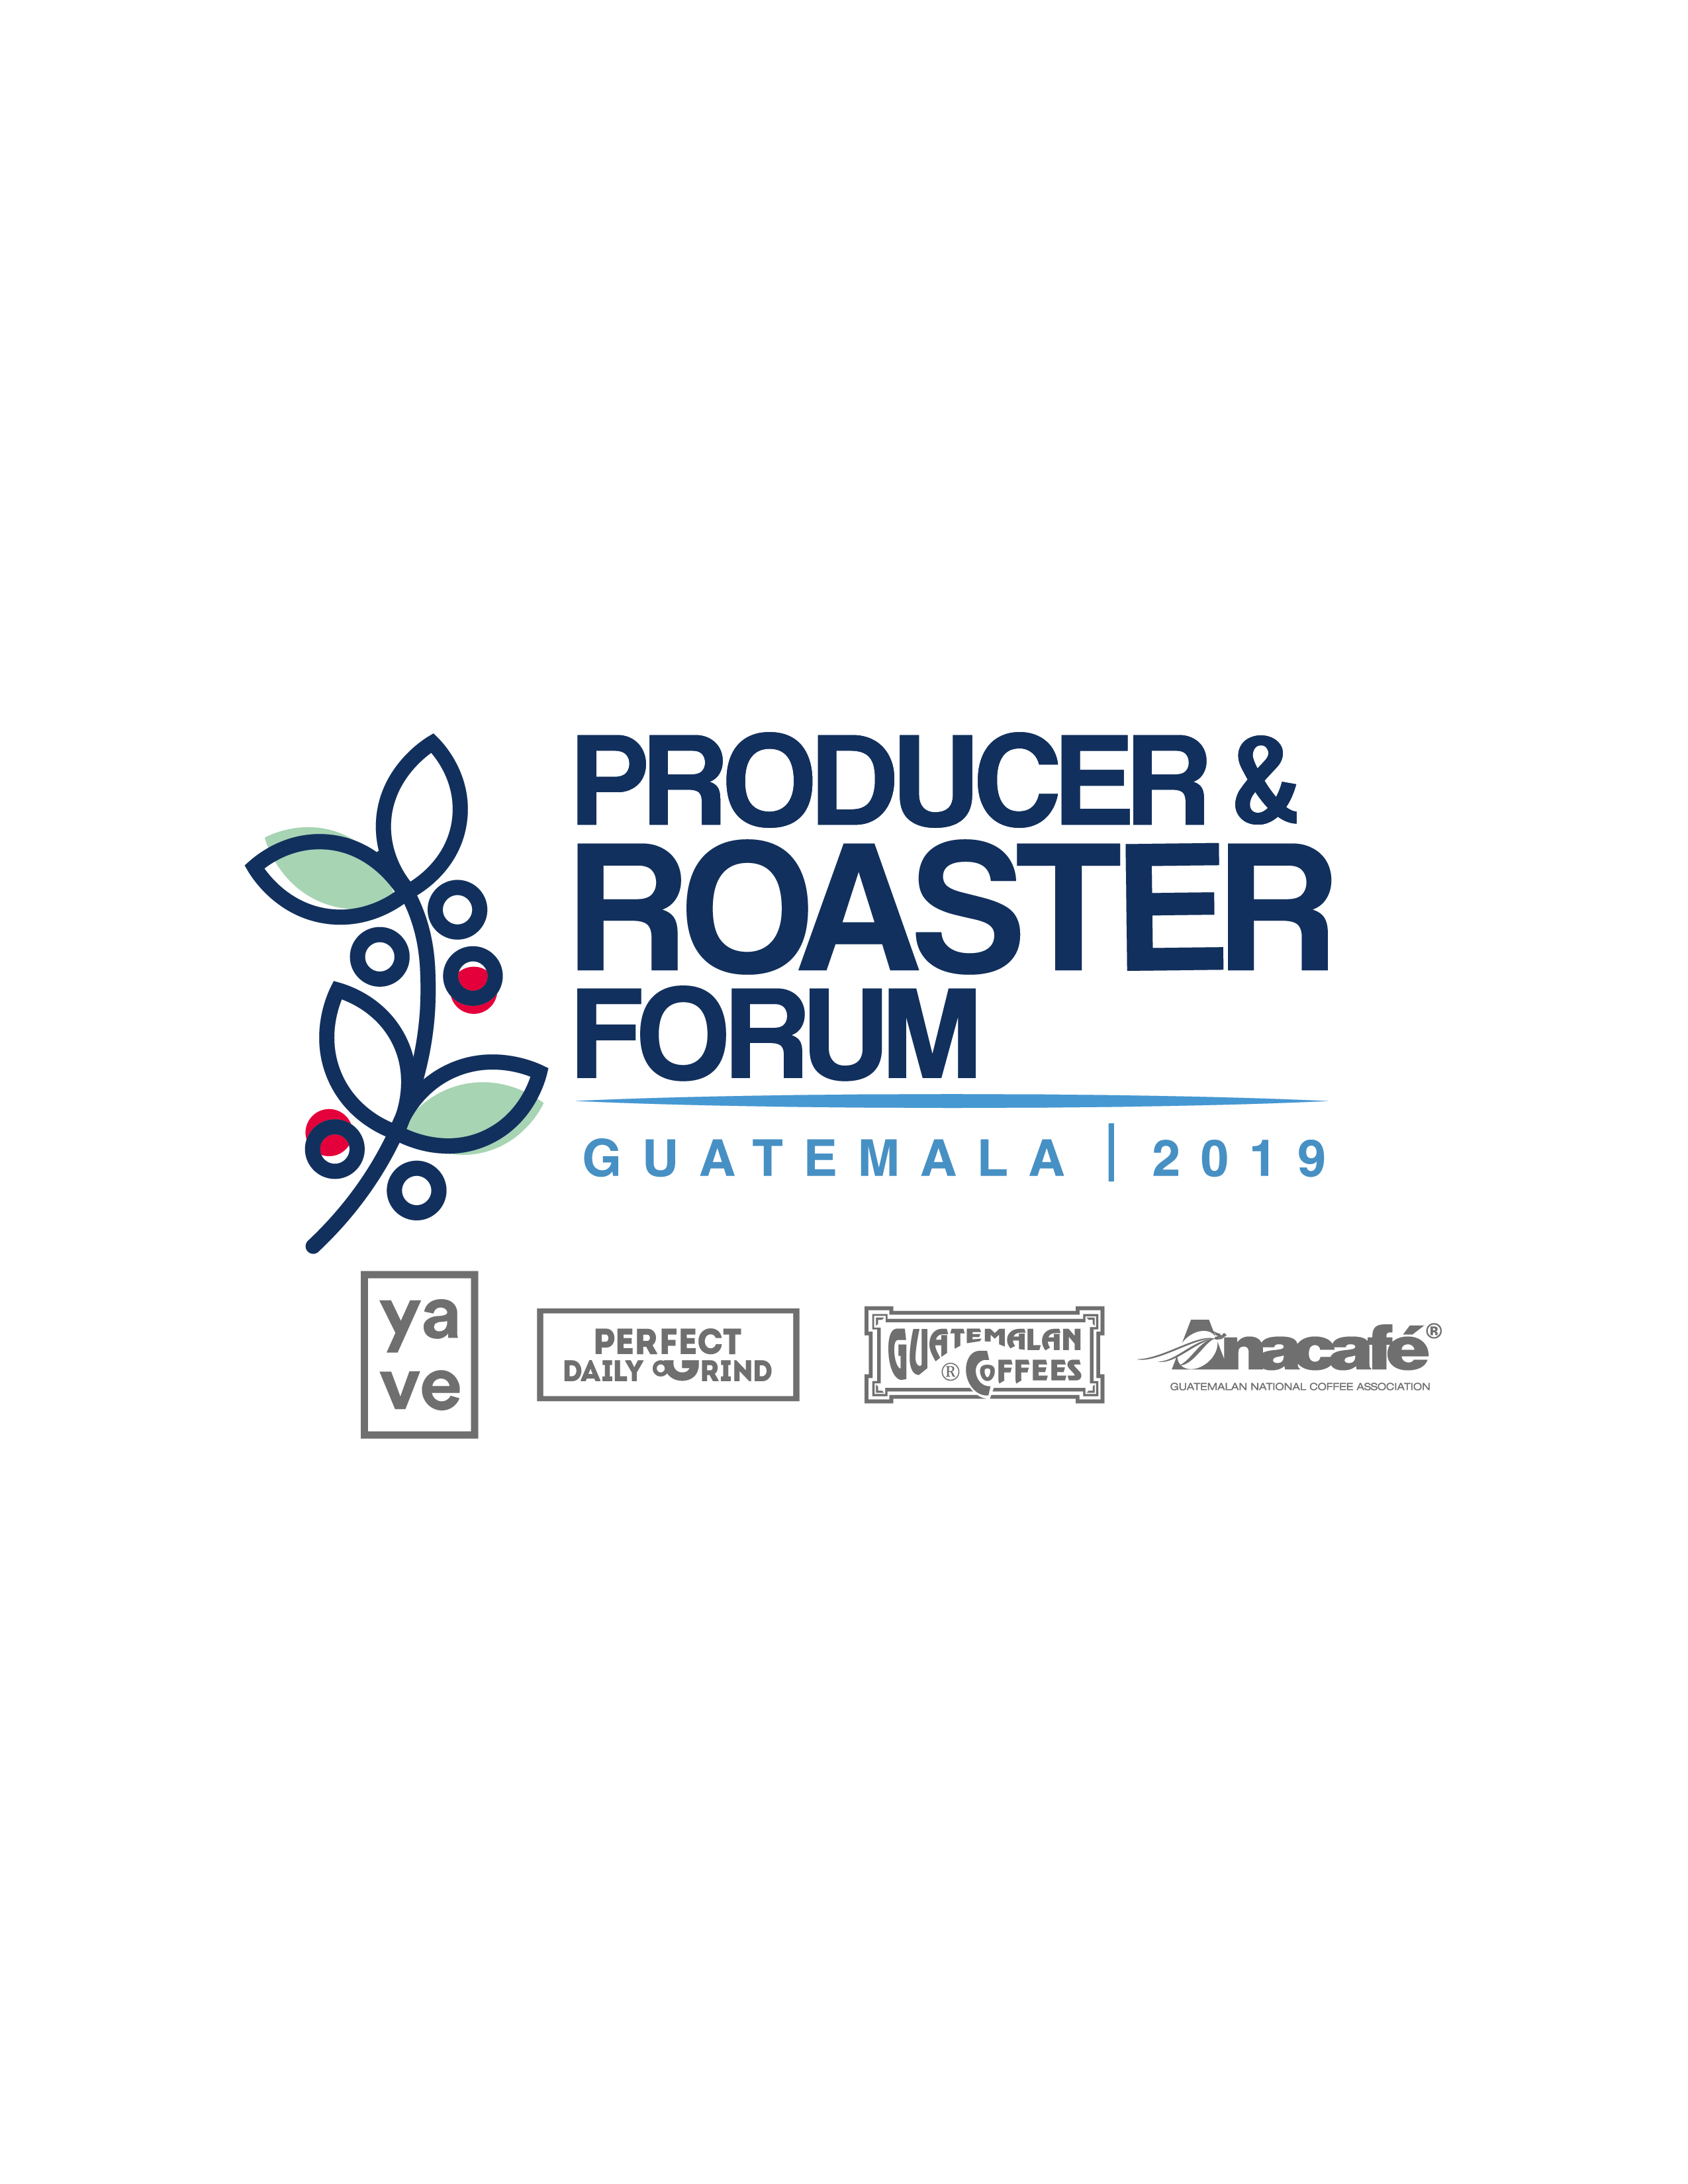 Producer & Roaster Forum: Guatemala 2019